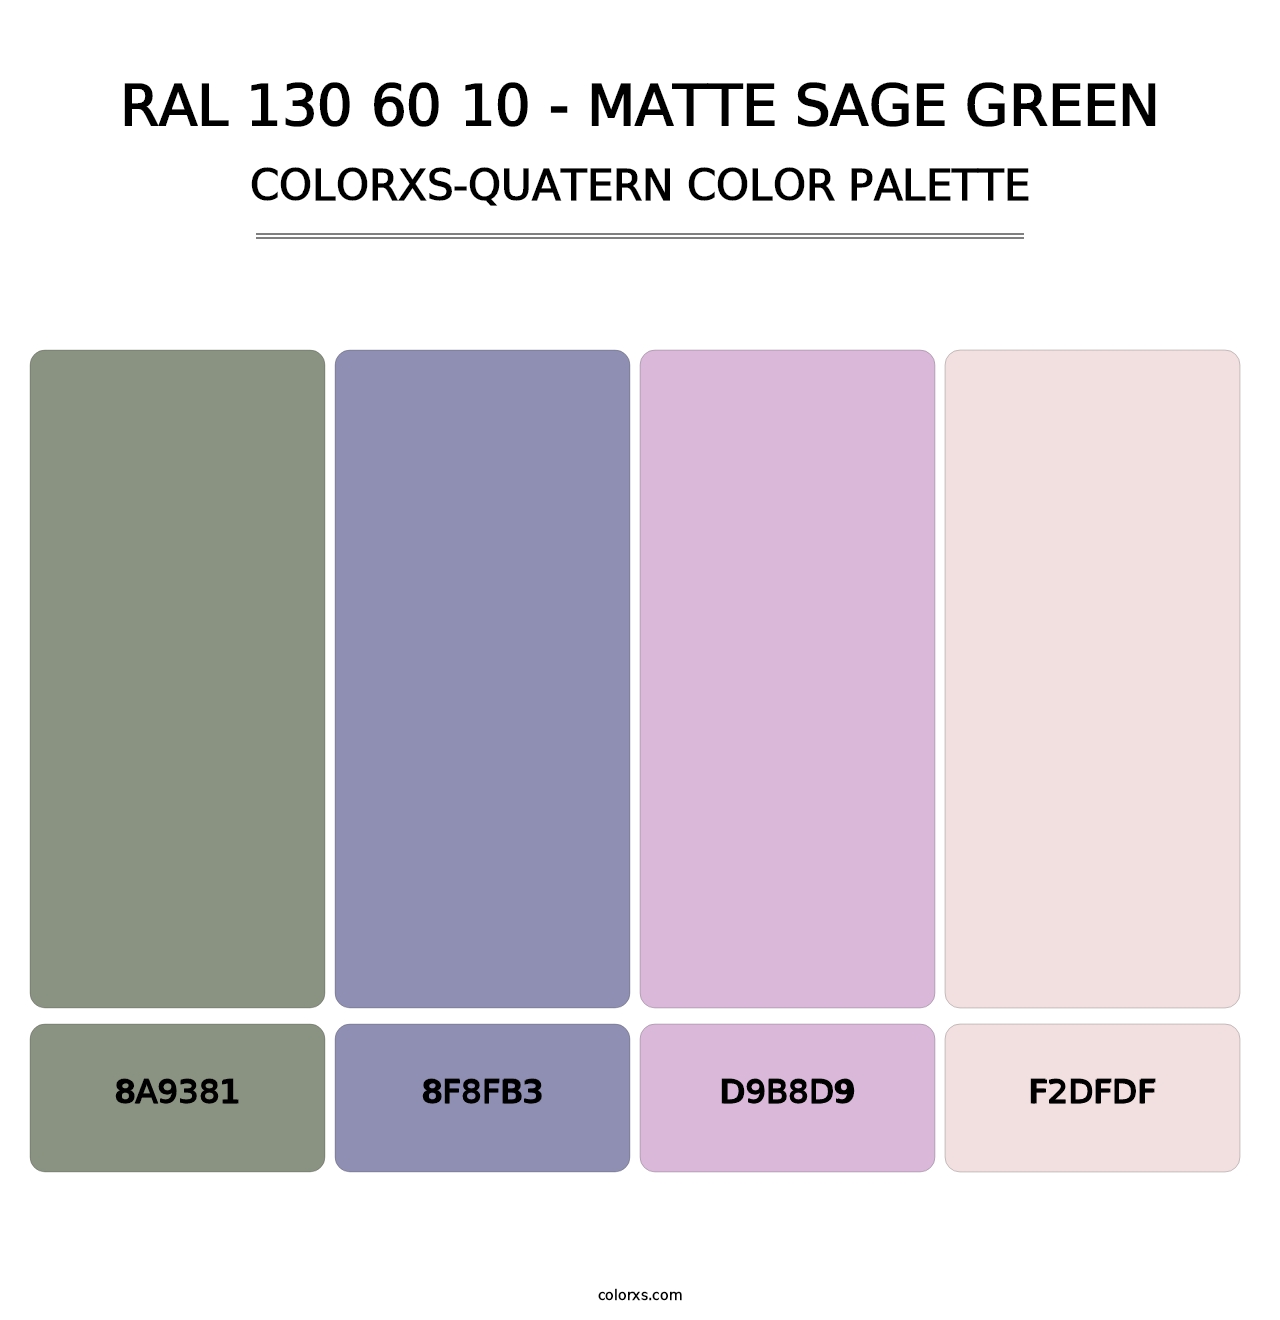 RAL 130 60 10 - Matte Sage Green - Colorxs Quatern Palette